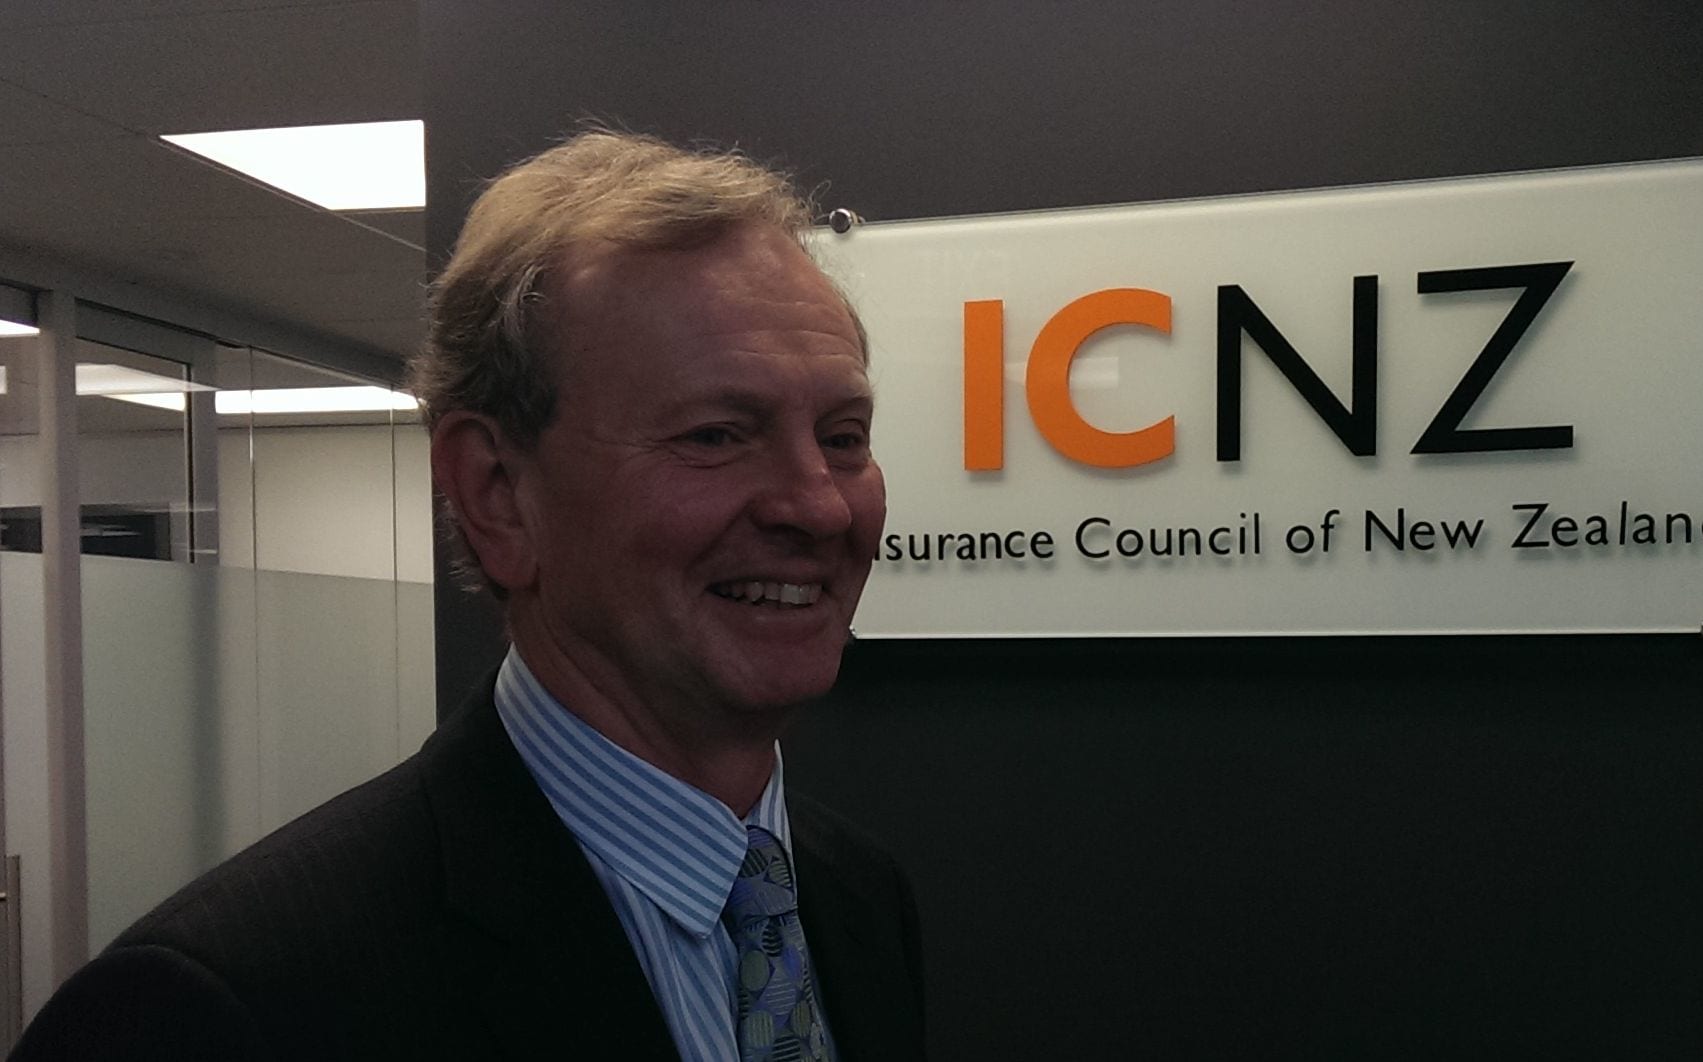 Insurance Council chief executive Tim Grafton